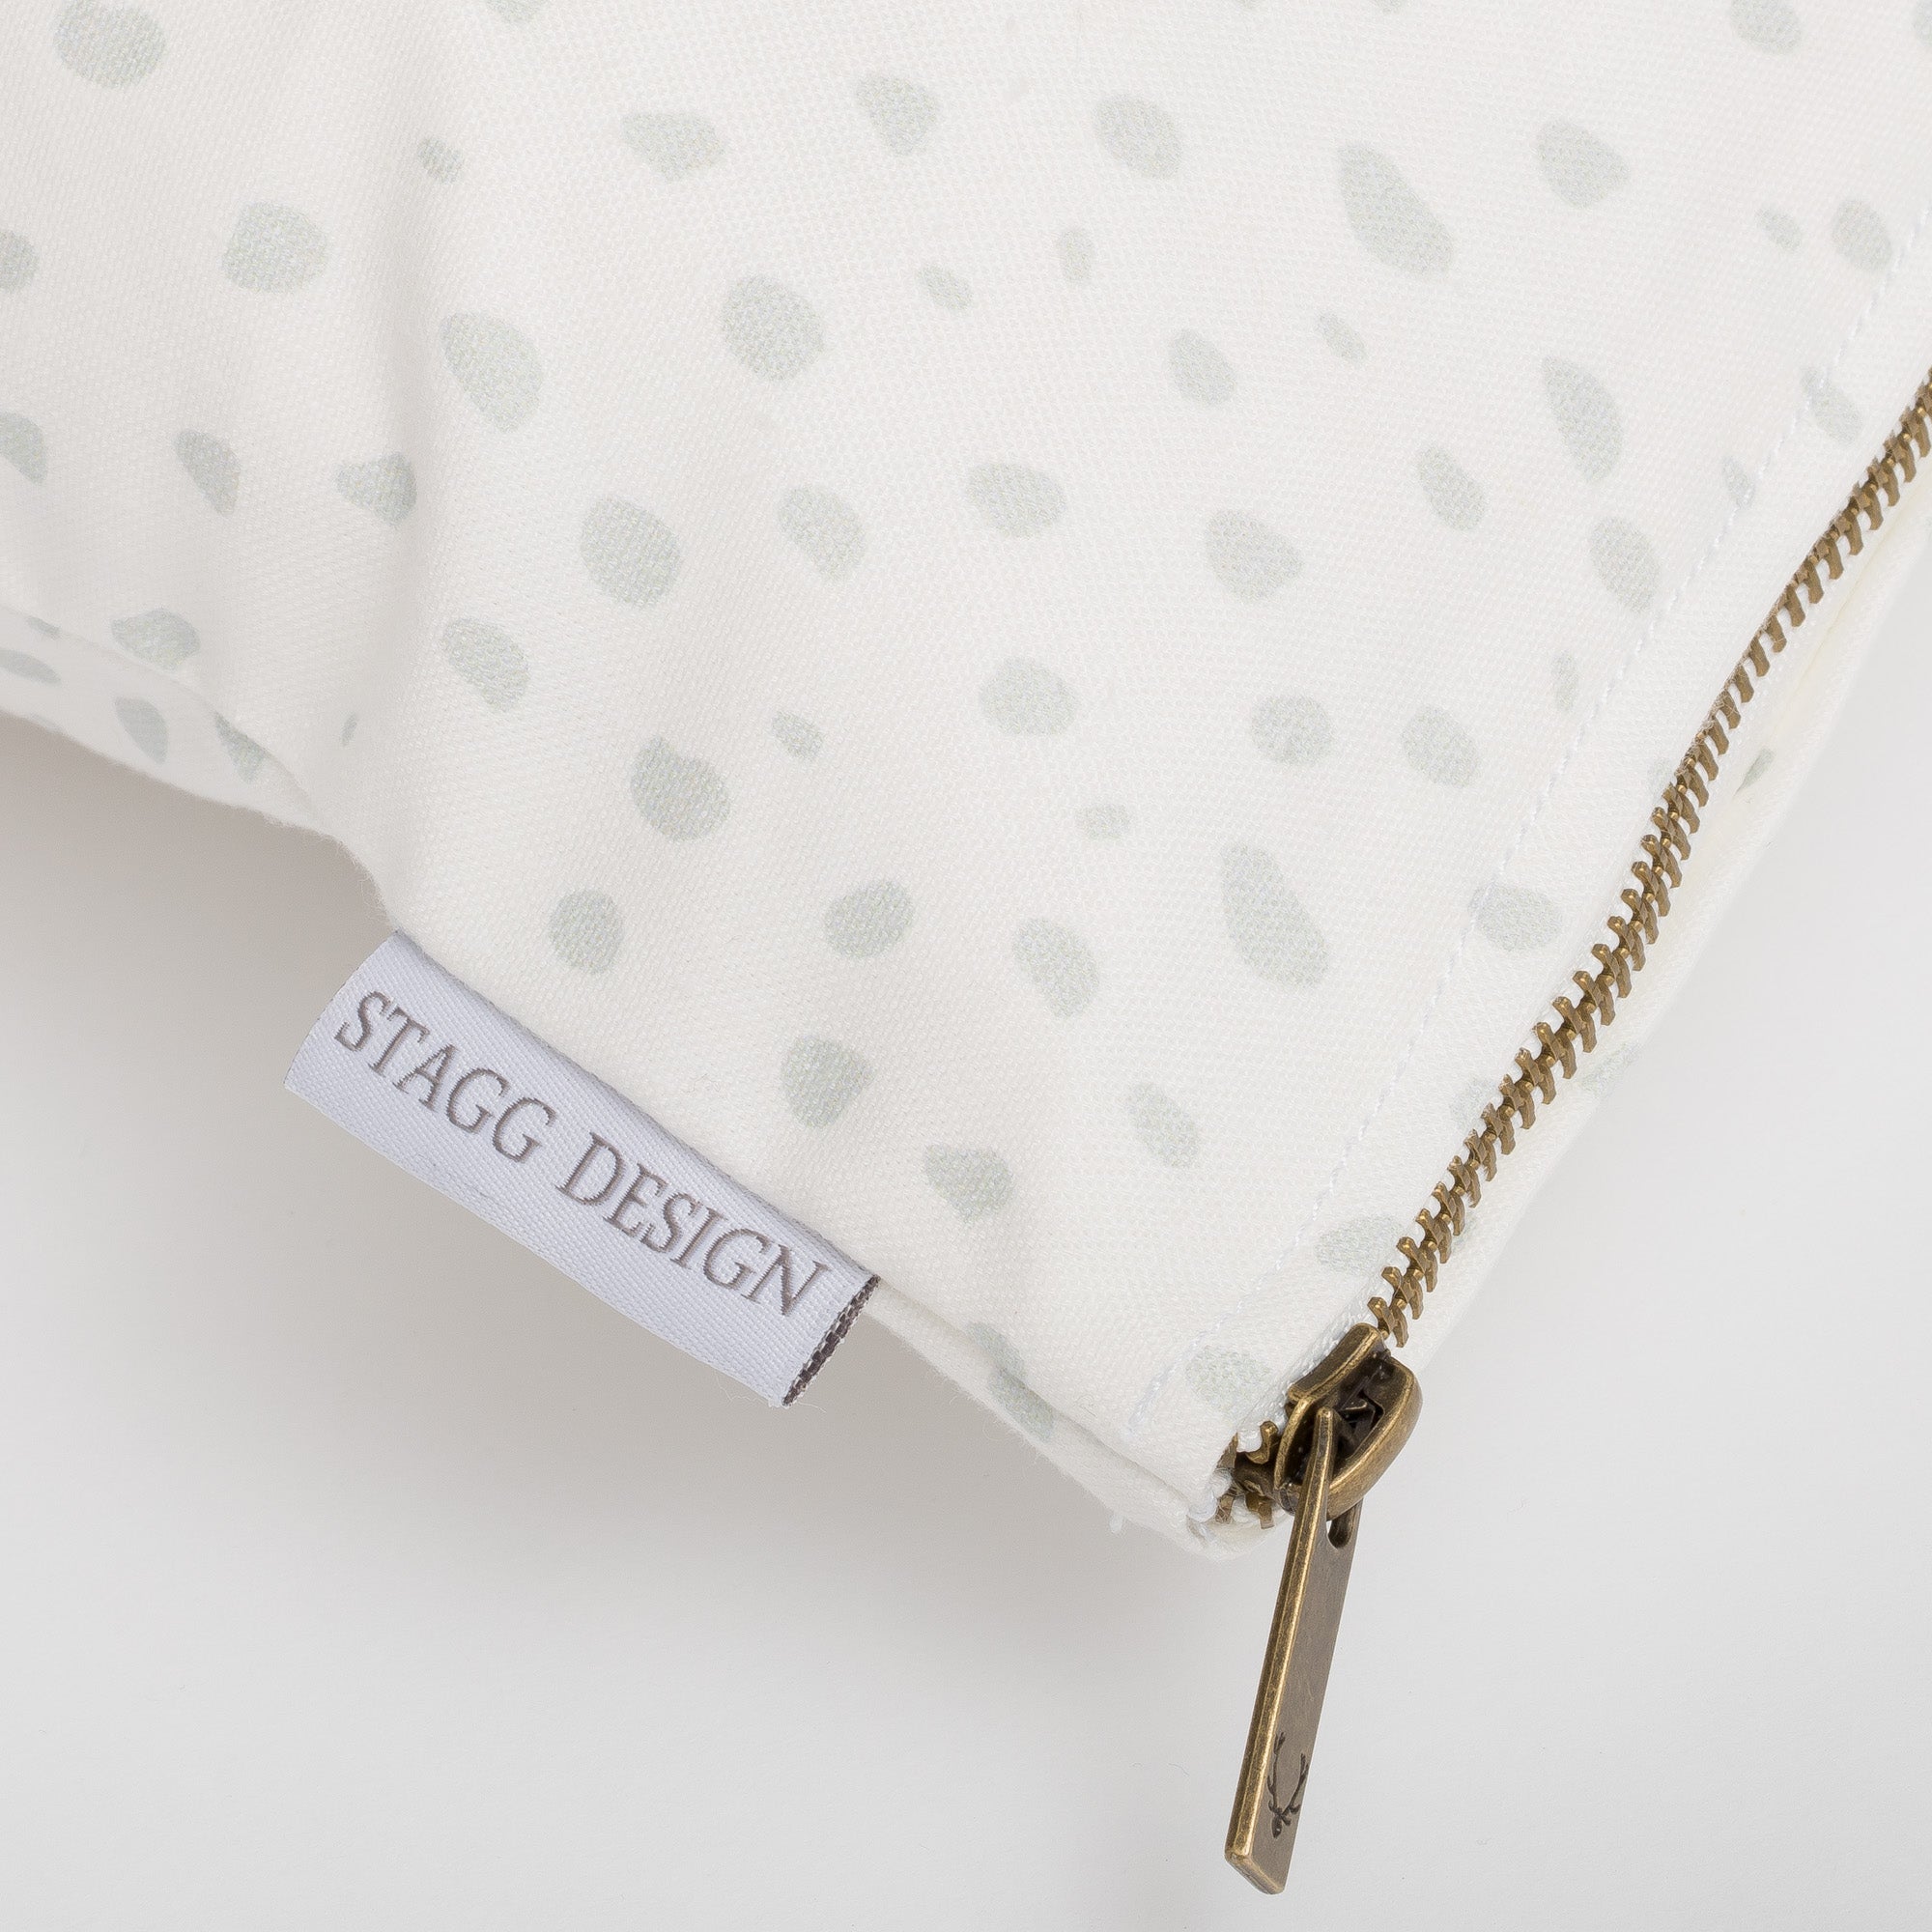 Modern Dot Pillow - Grey on White